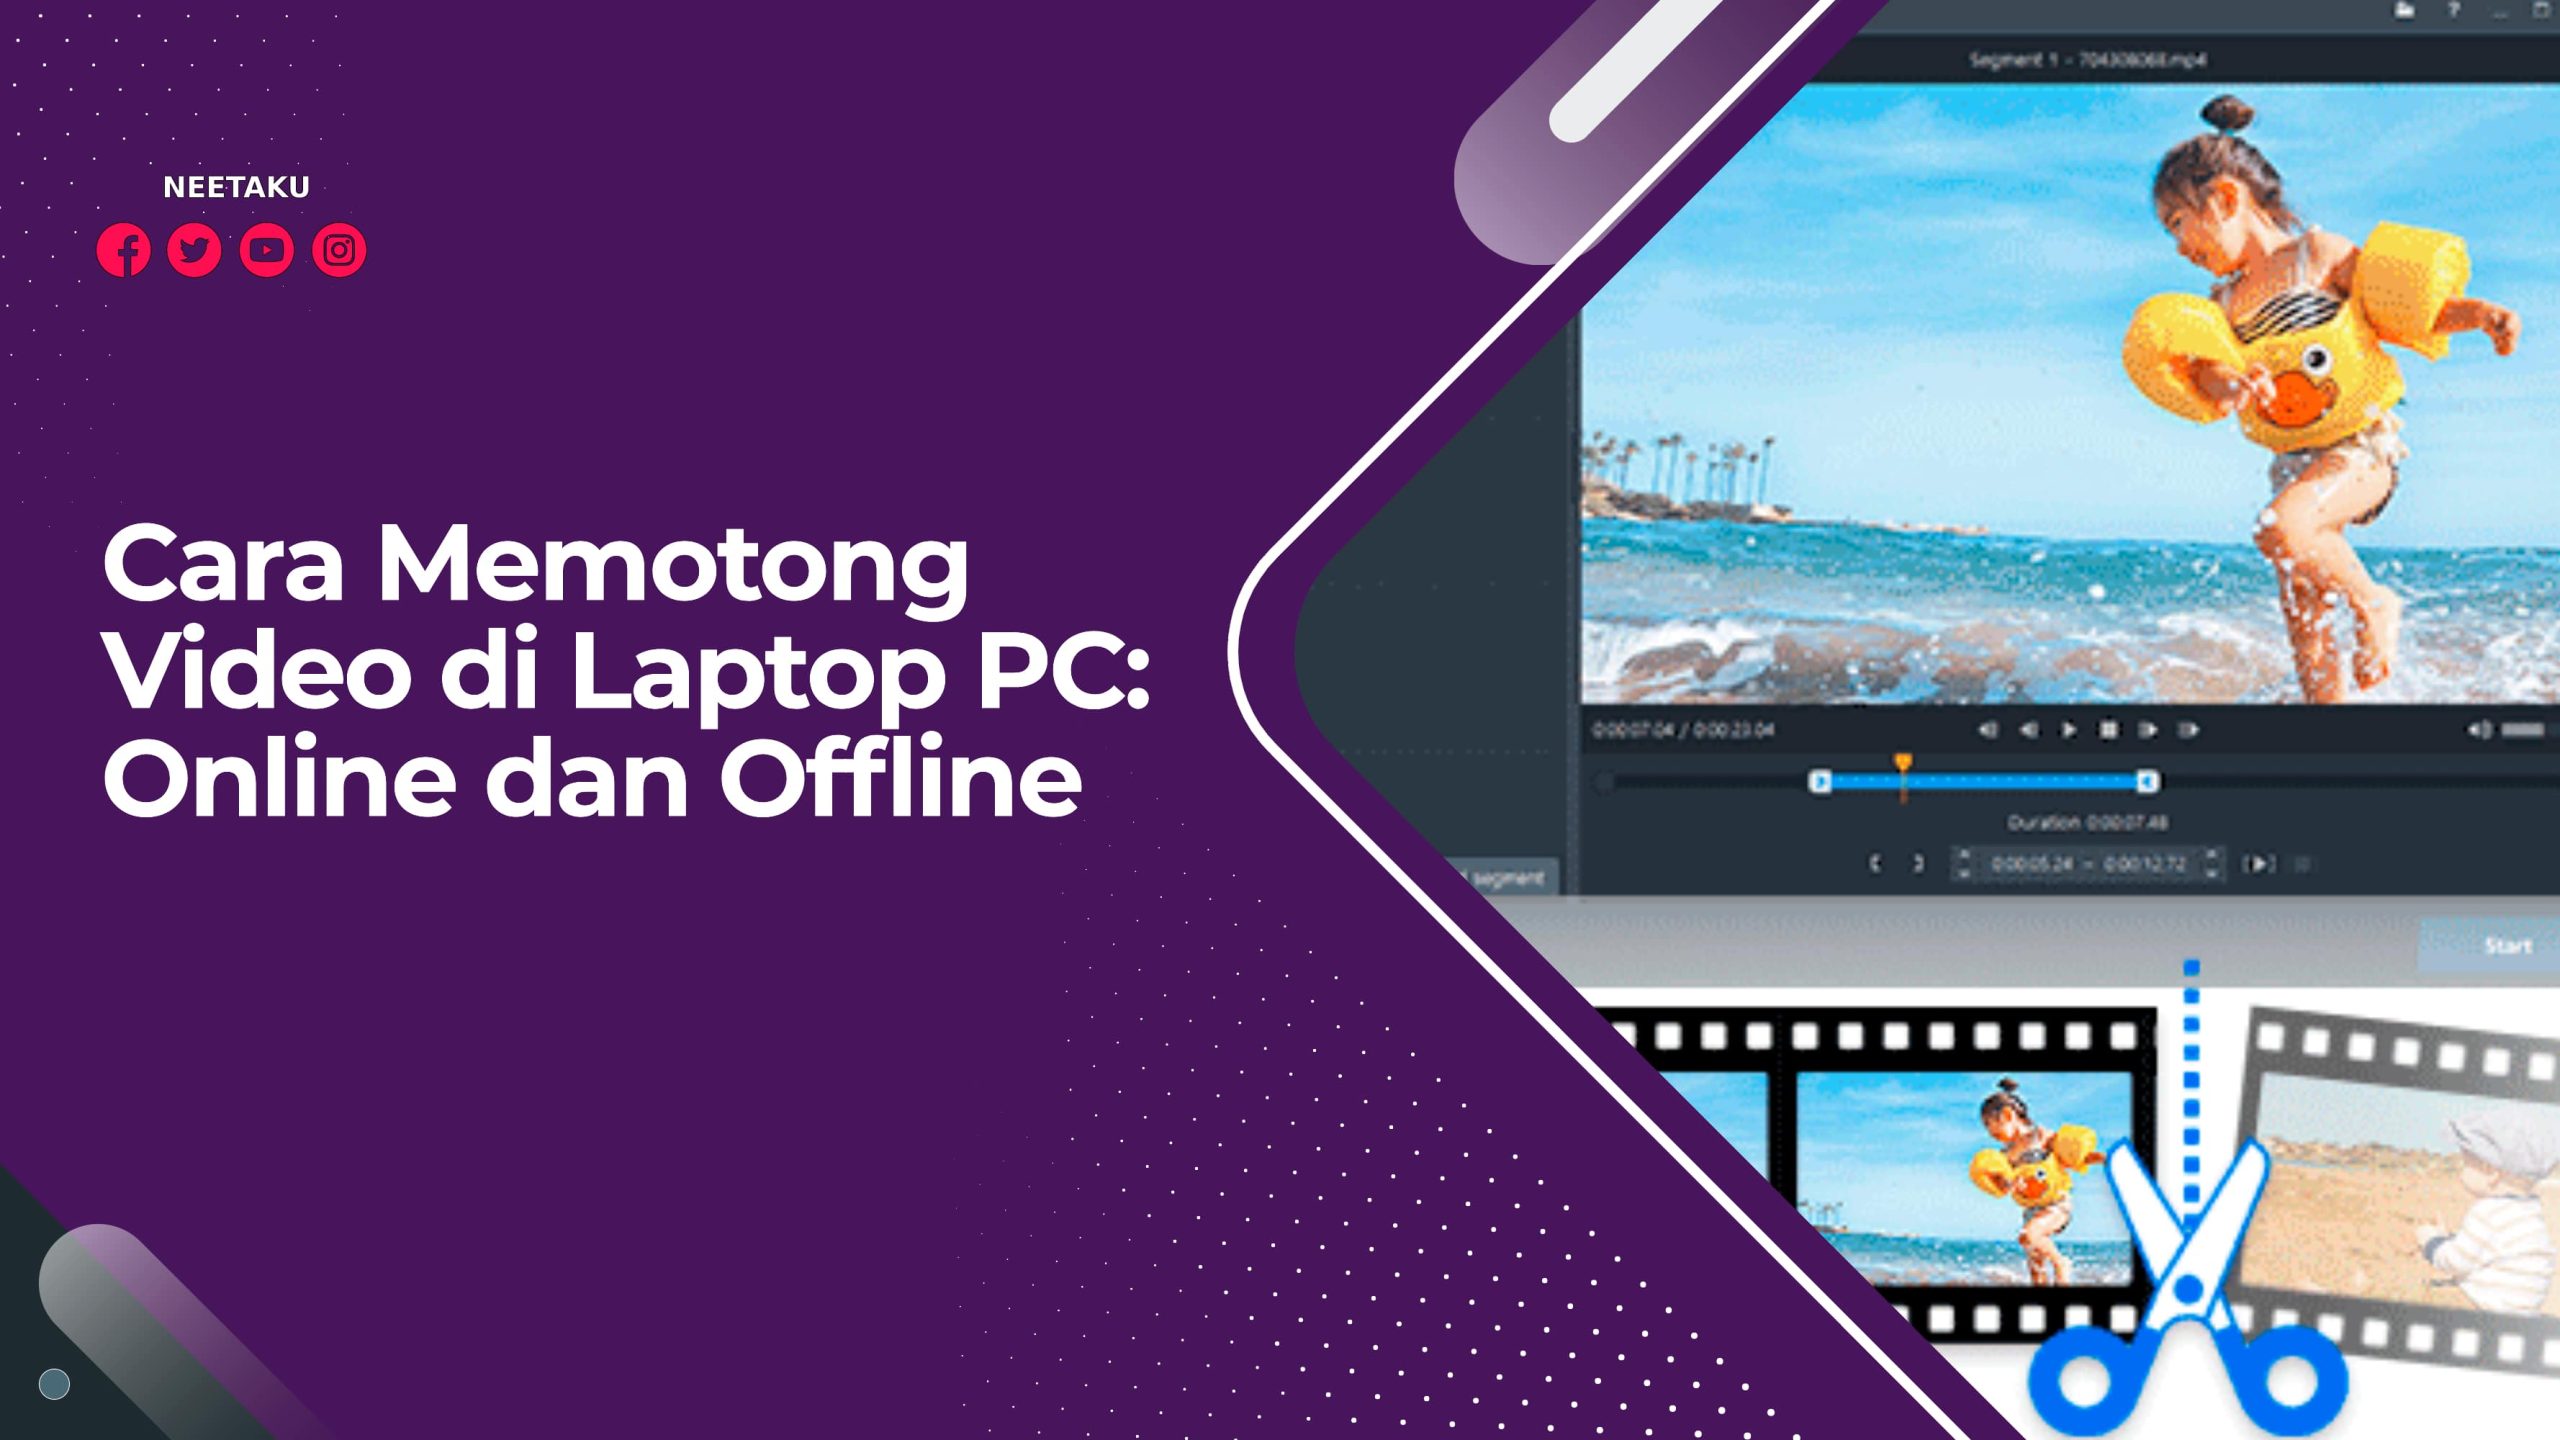 Cara Memotong Video di Laptop PC